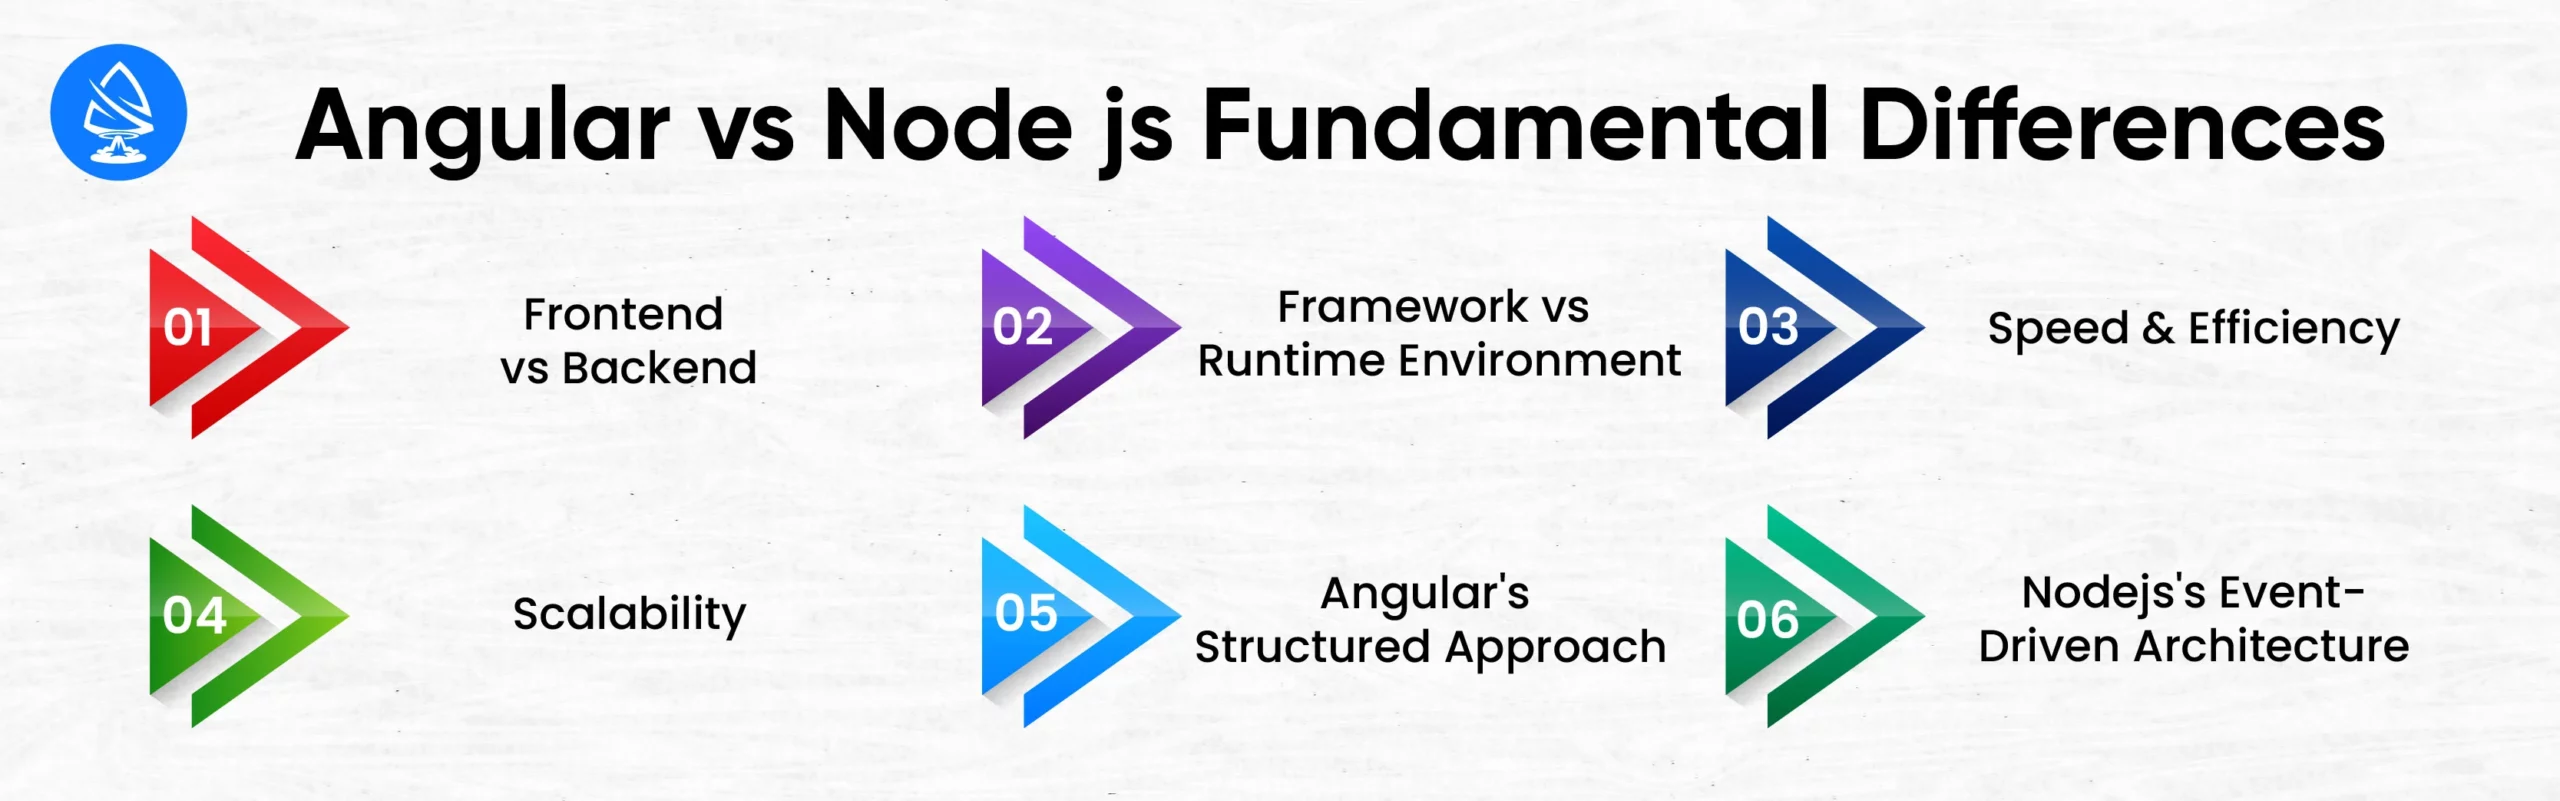 Angular vs Node js: Fundamental Differences 